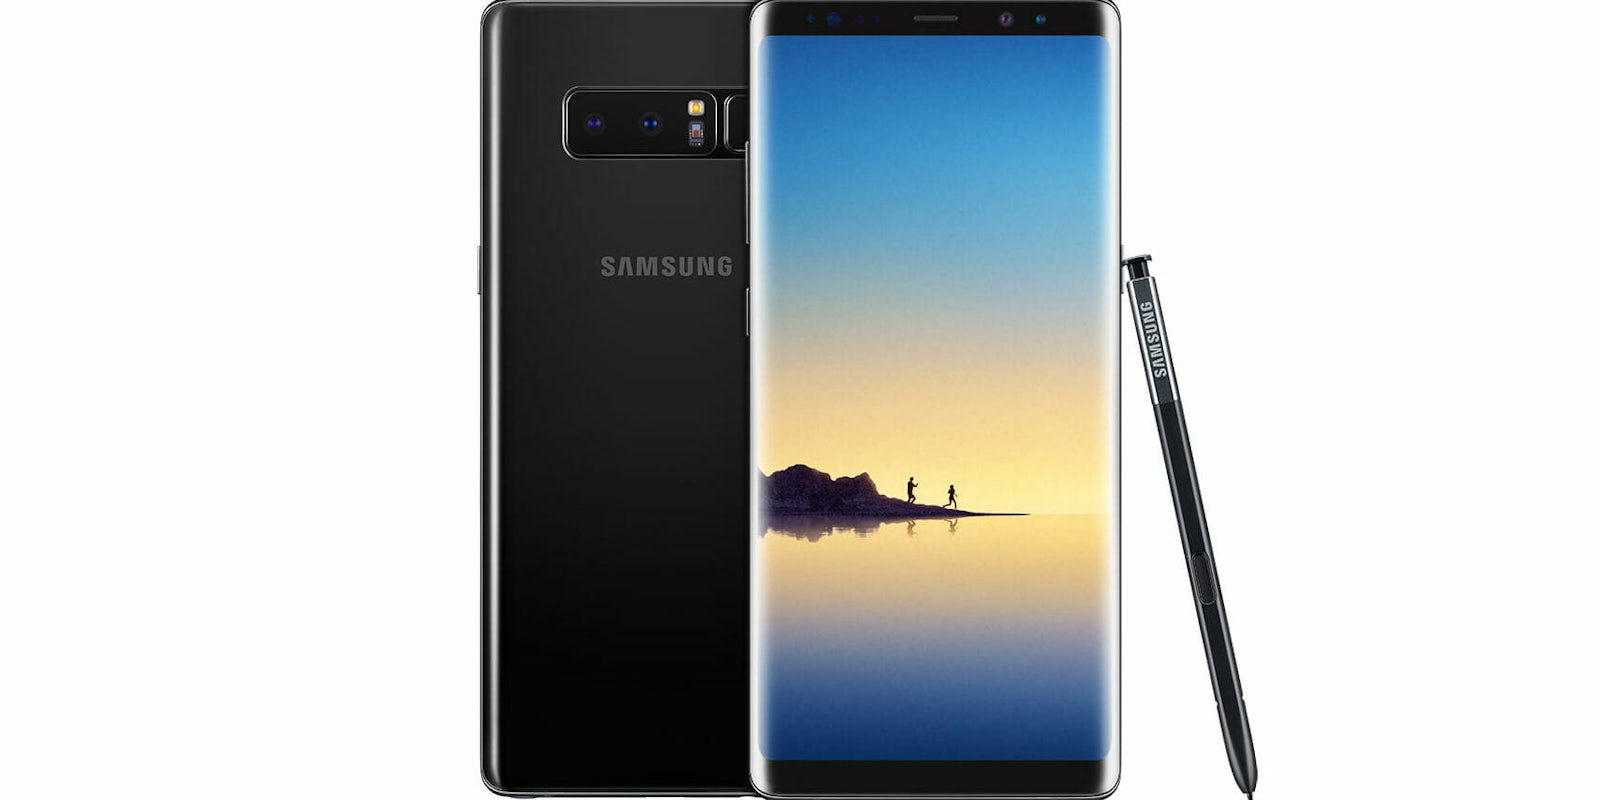 samsung galaxy note 8 flagship smartphone